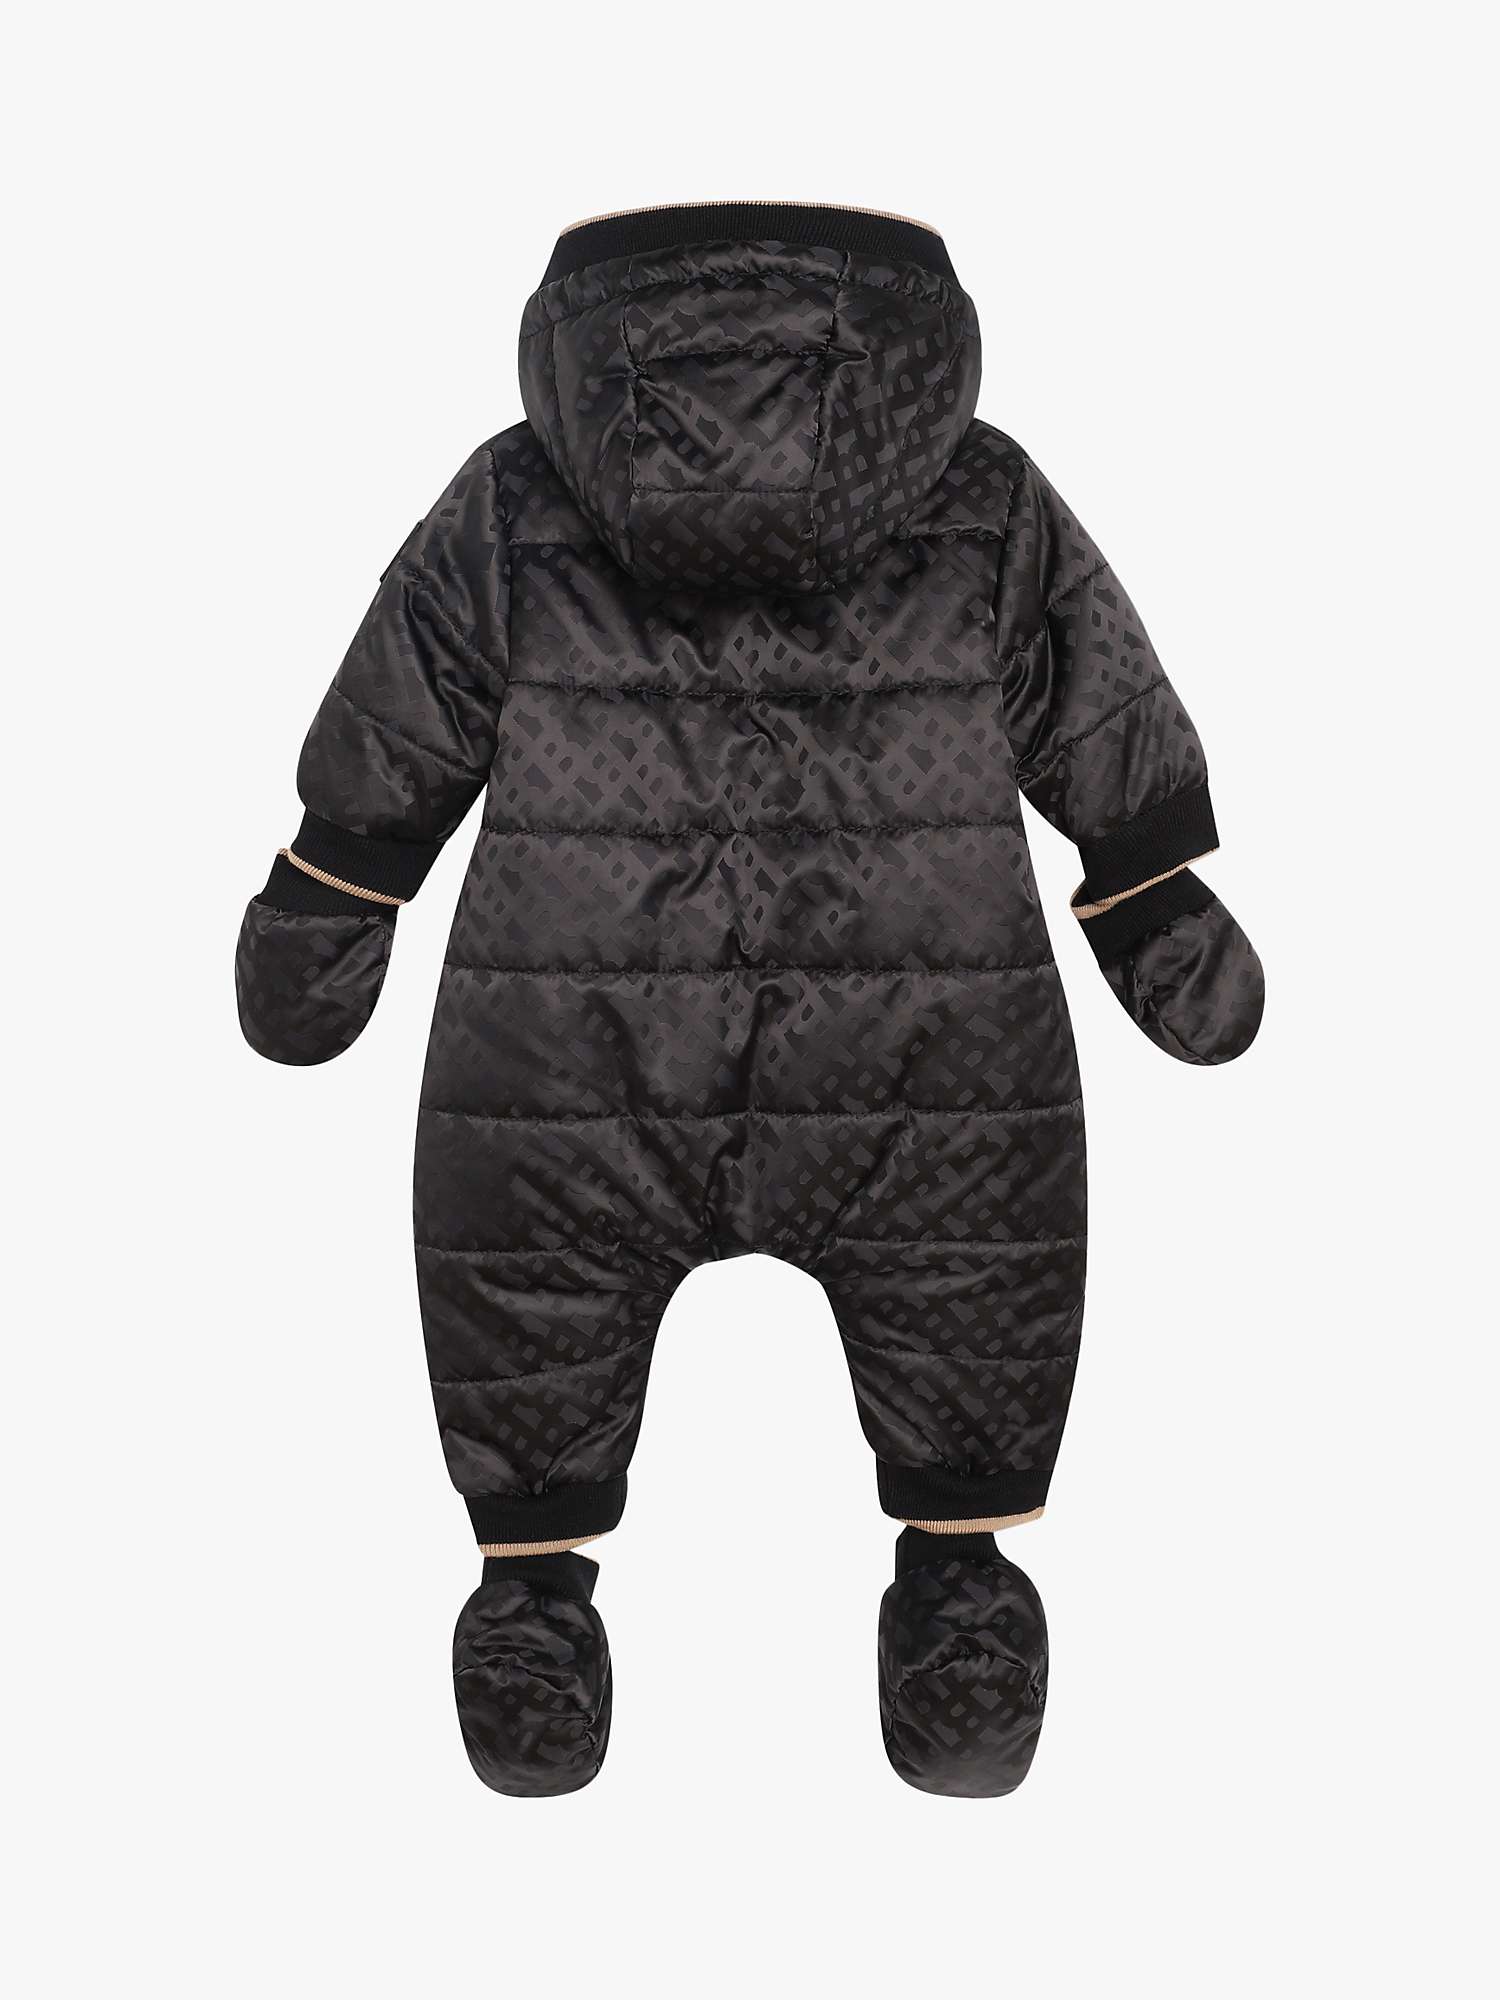 Buy BOSS Baby Snowsuit, Black Online at johnlewis.com